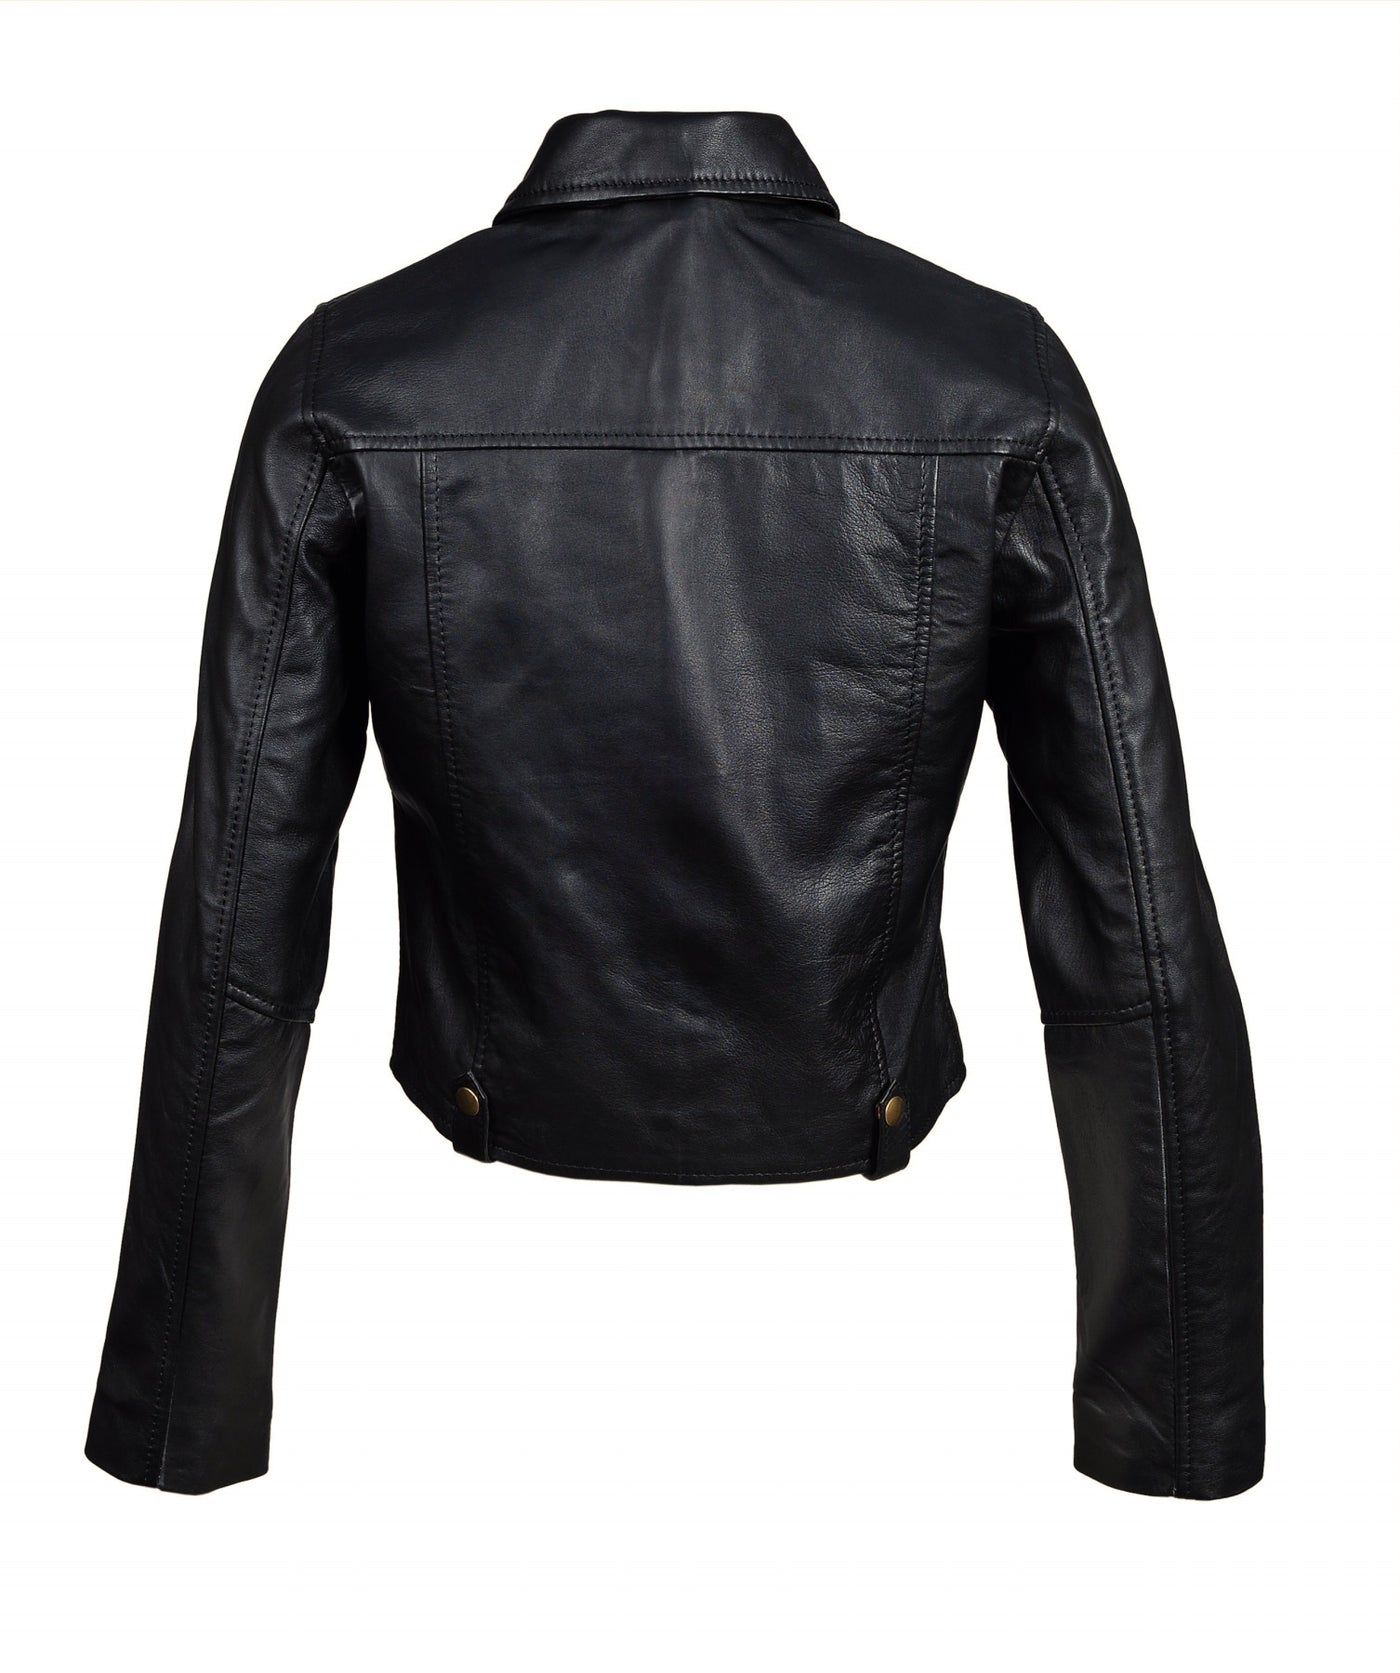 Unique Moesha's classic crop leather jacket